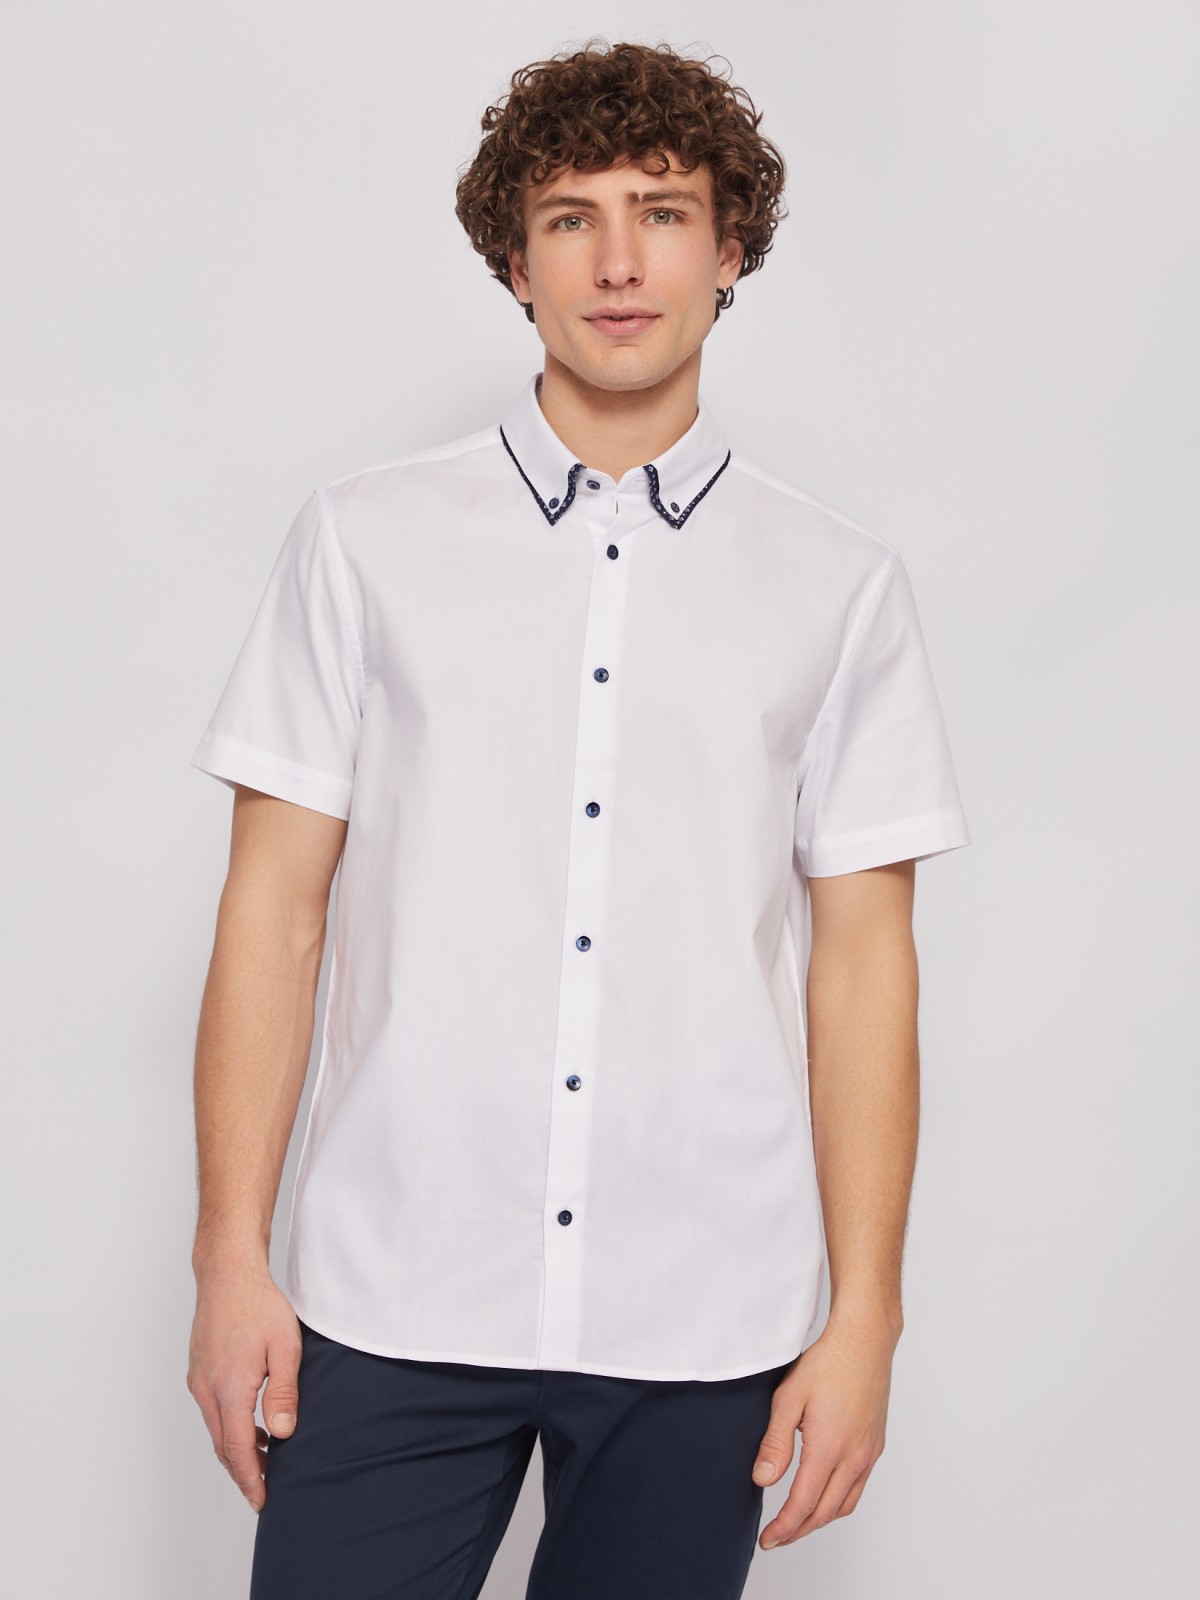 Офисная рубашка с коротким рукавом zolla 014222259083, цвет белый, размер XL - фото 3